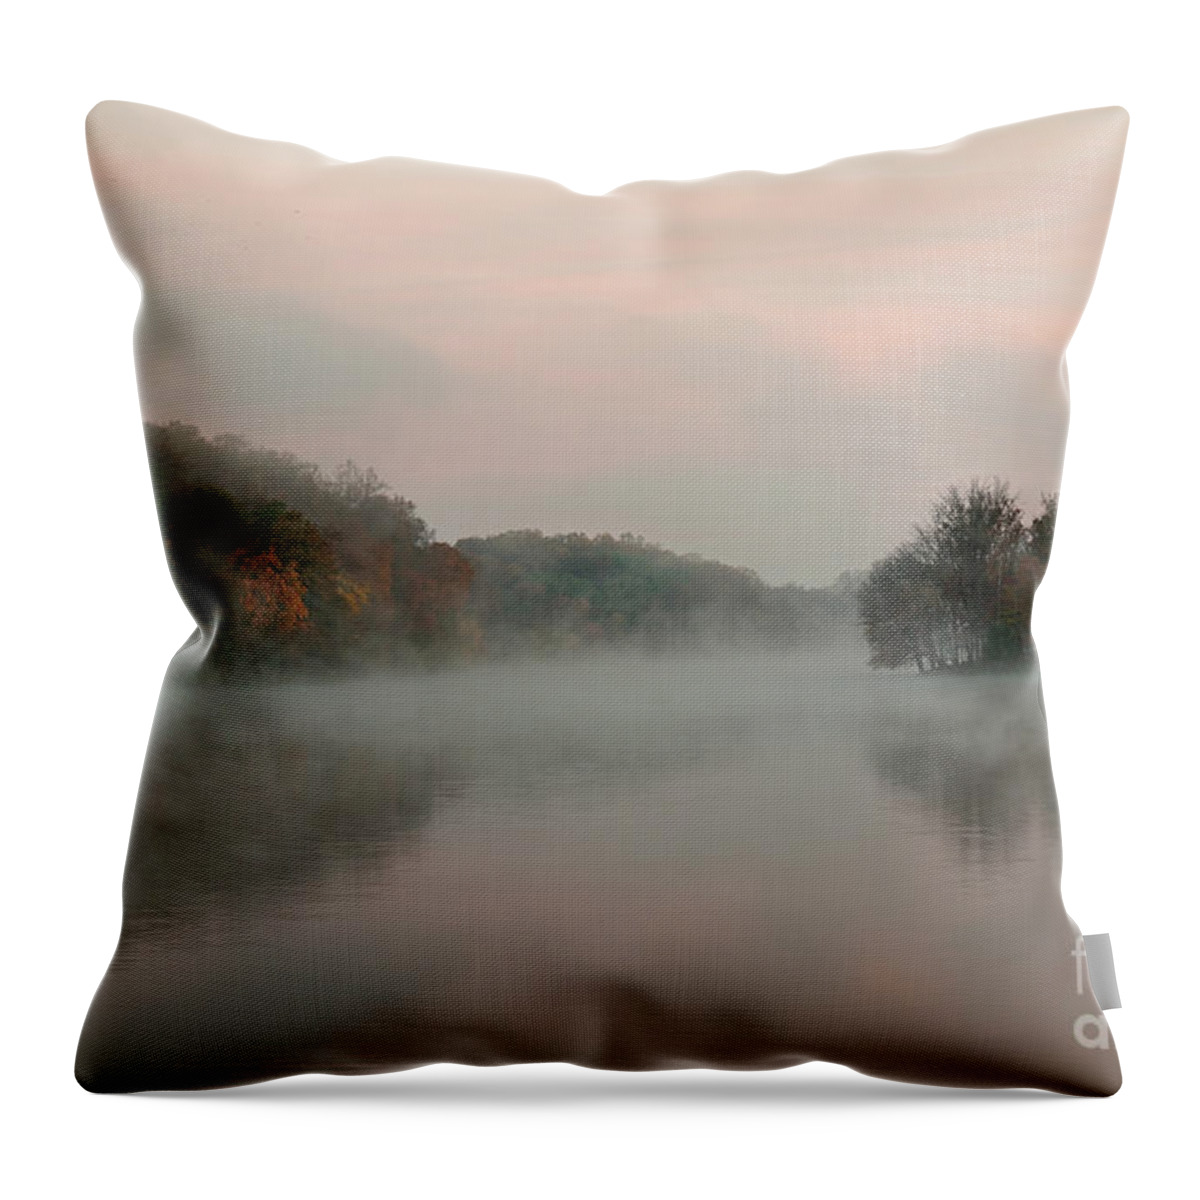 Lake Throw Pillow featuring the photograph Morning fog by Izet Kapetanovic